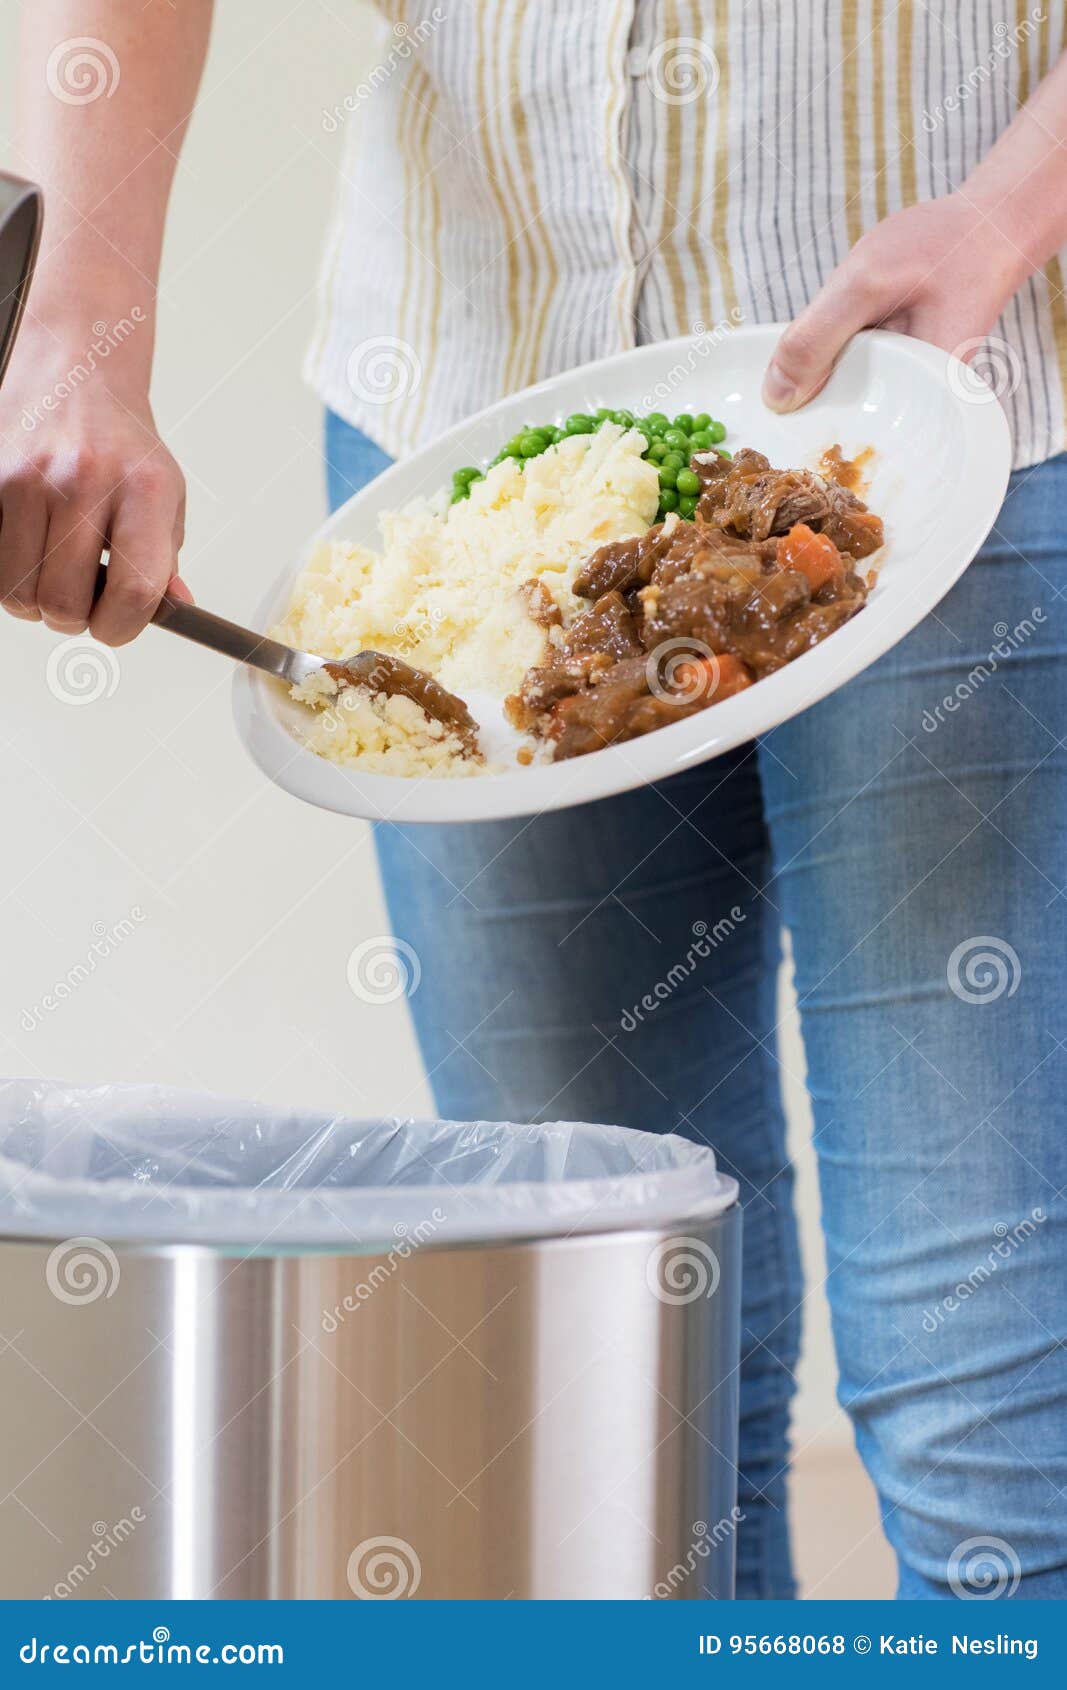 woman scraping food leftovers into garbage bin